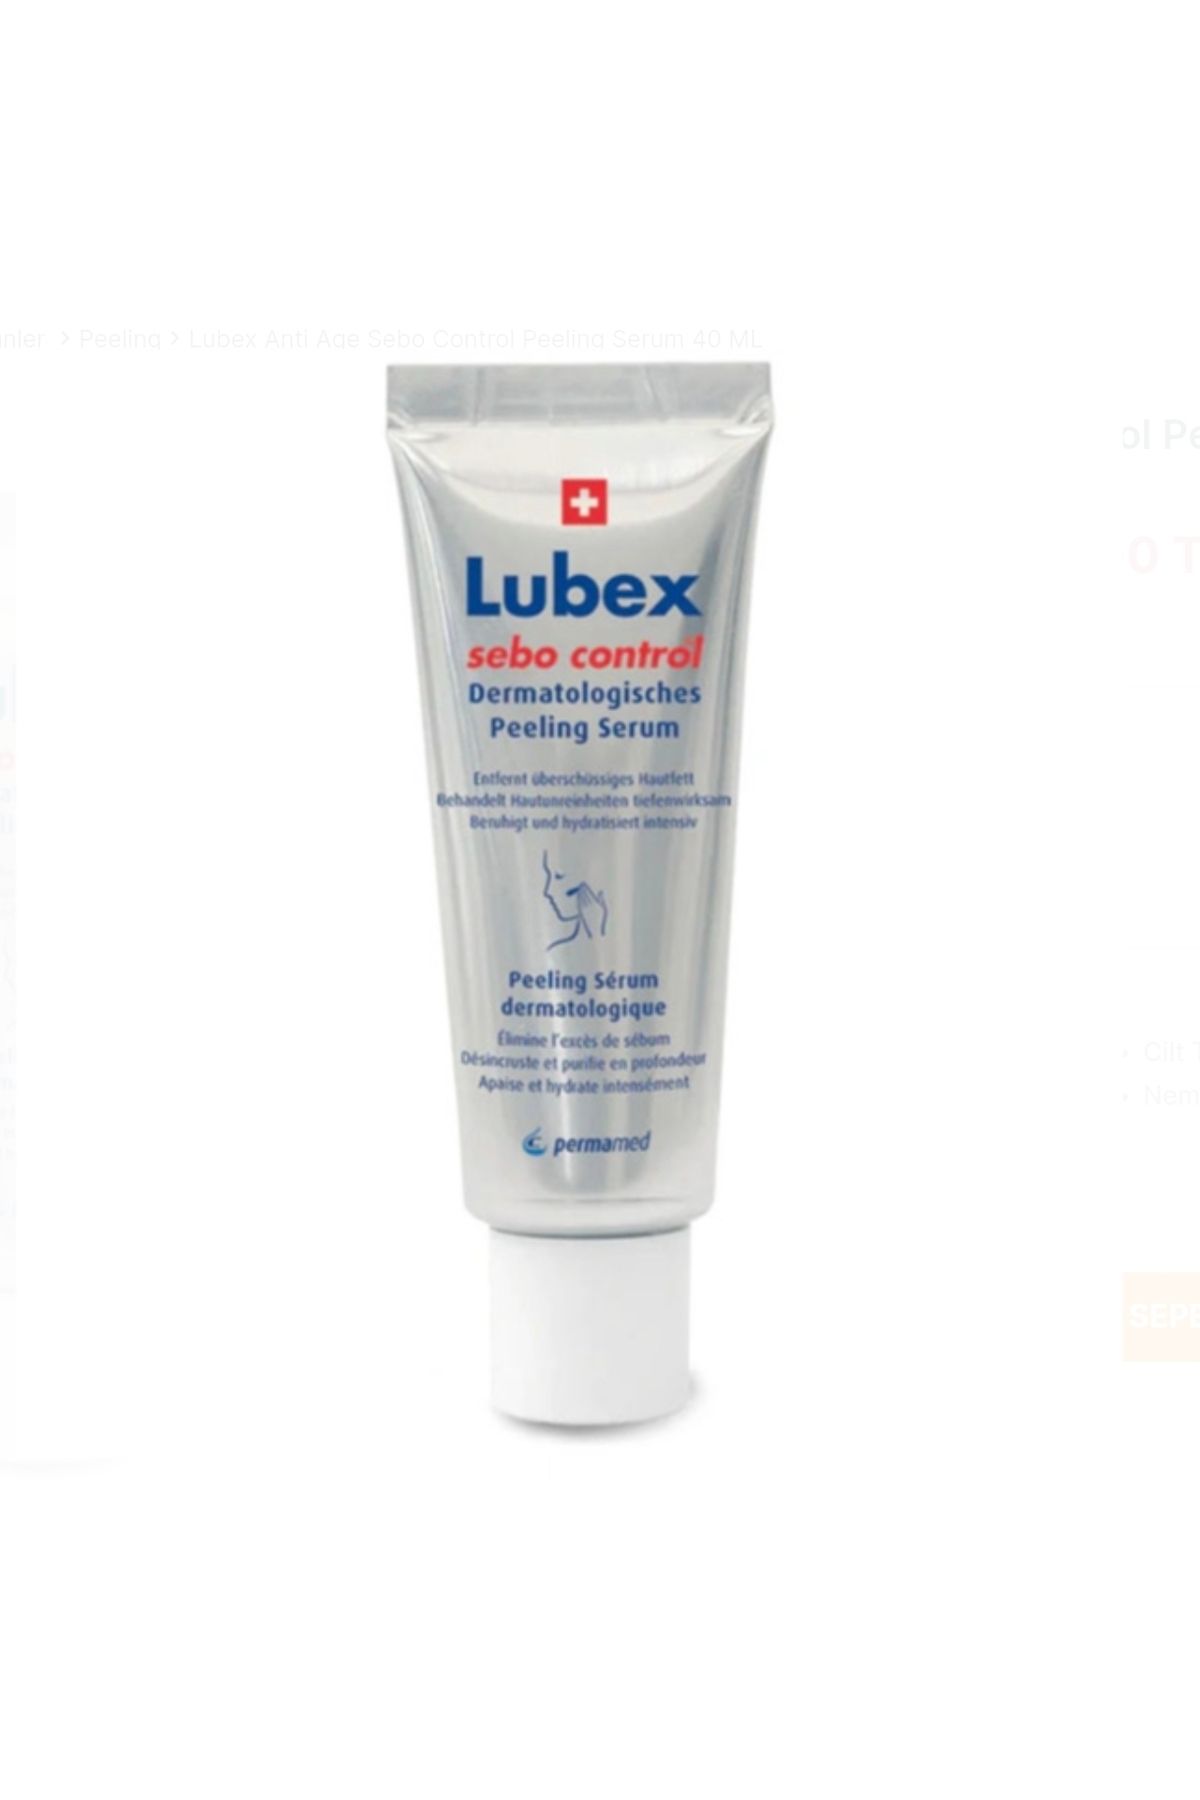 Lubex Sivilce İzlerinde Etkili Durulanmayan Anti Age Sebo Control Peeling Serum 40 ML